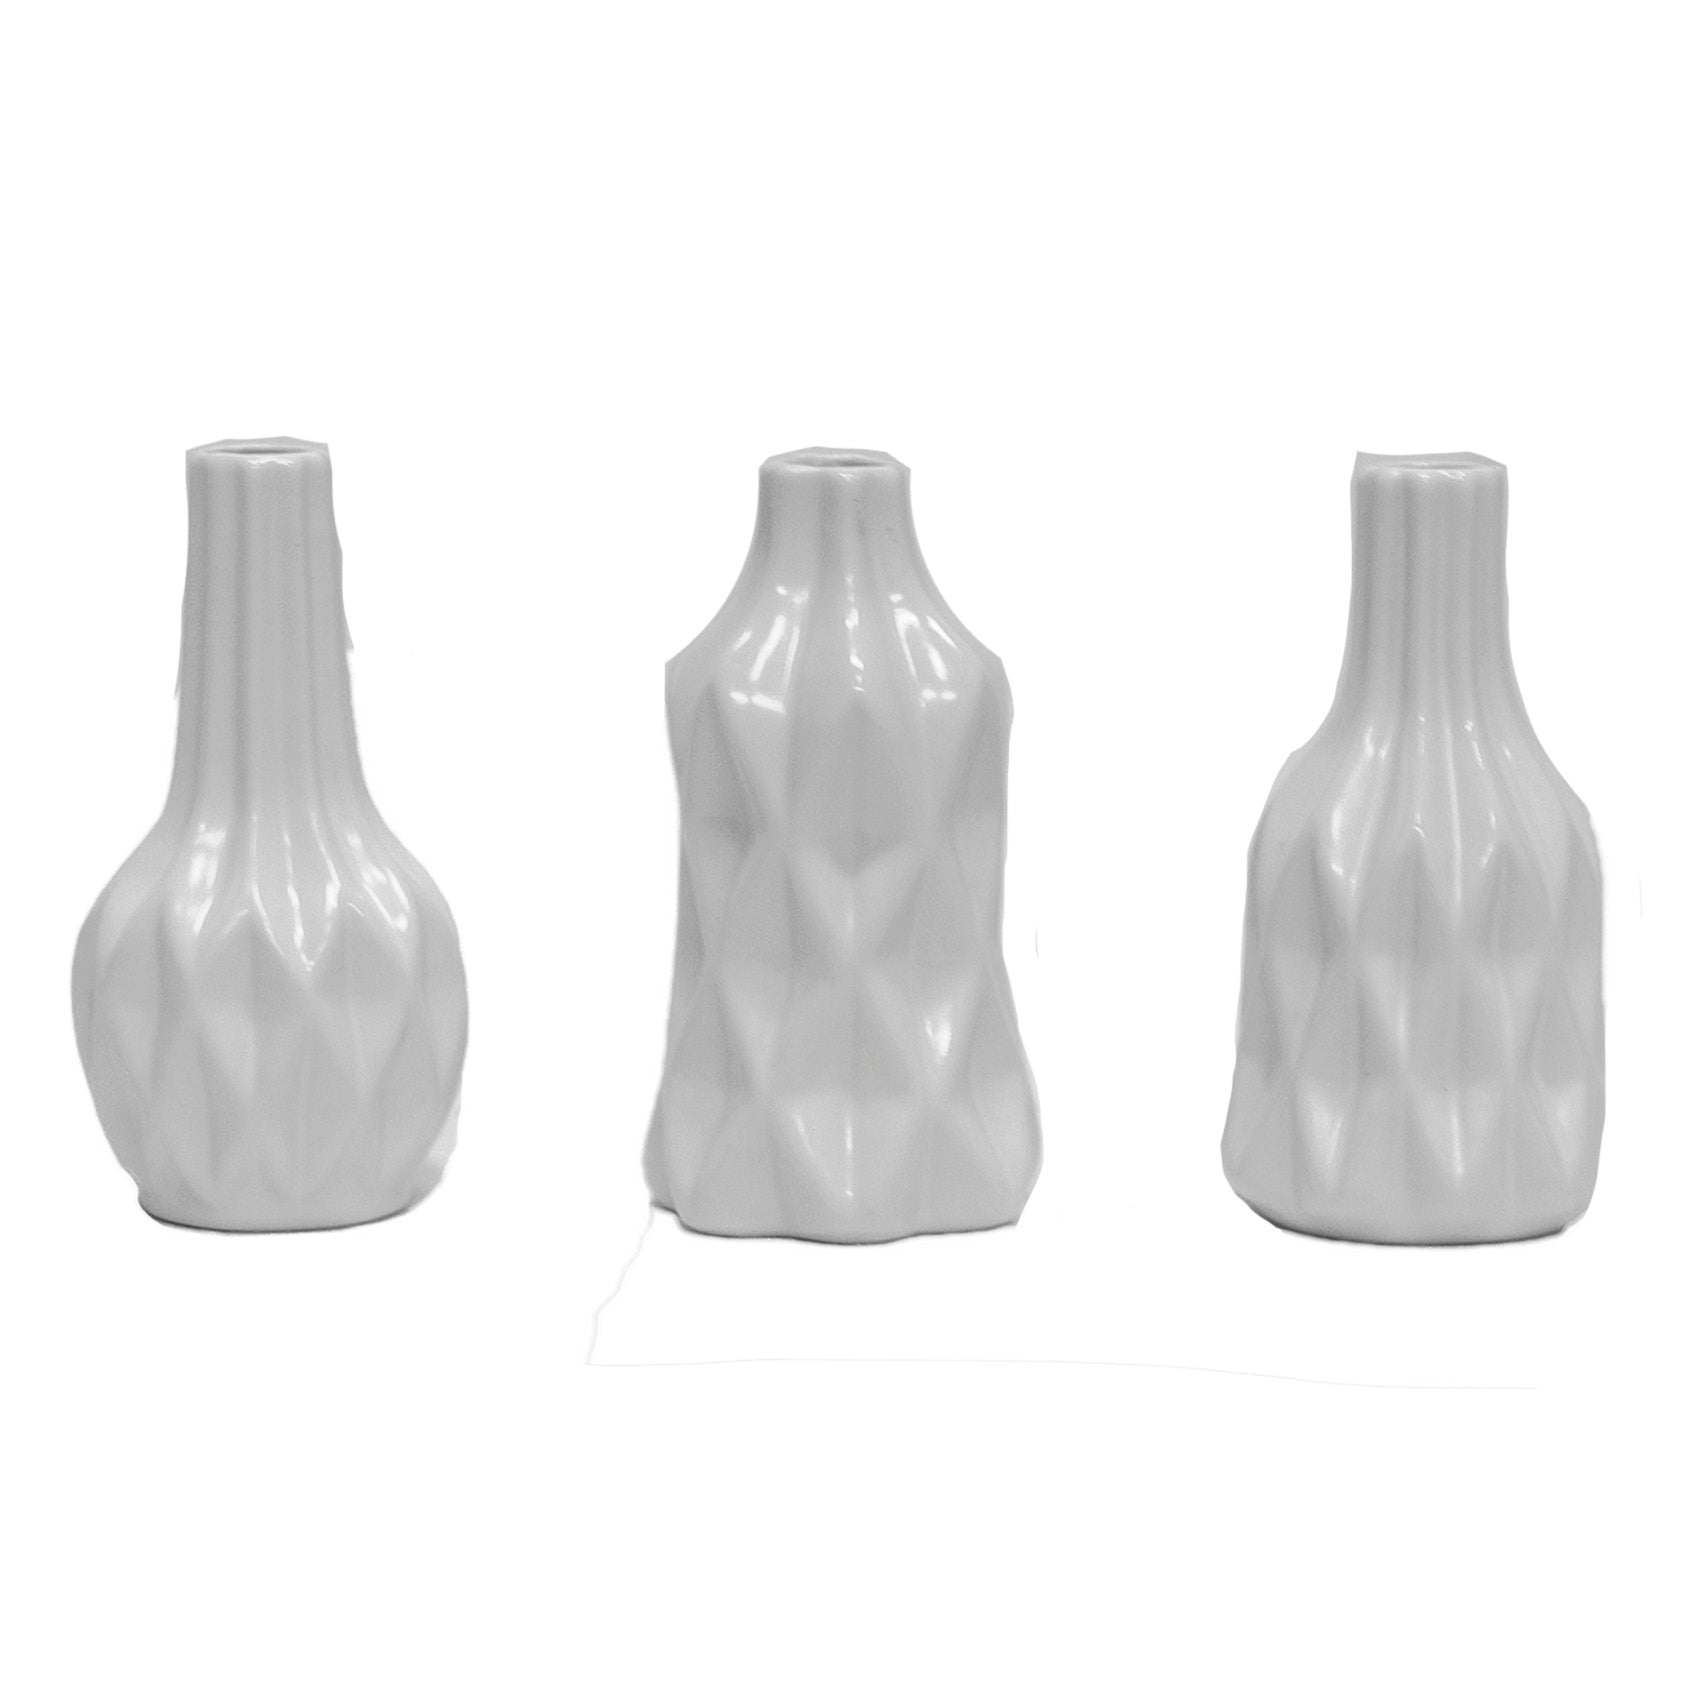 Small Ceramic Striped Bud Vases